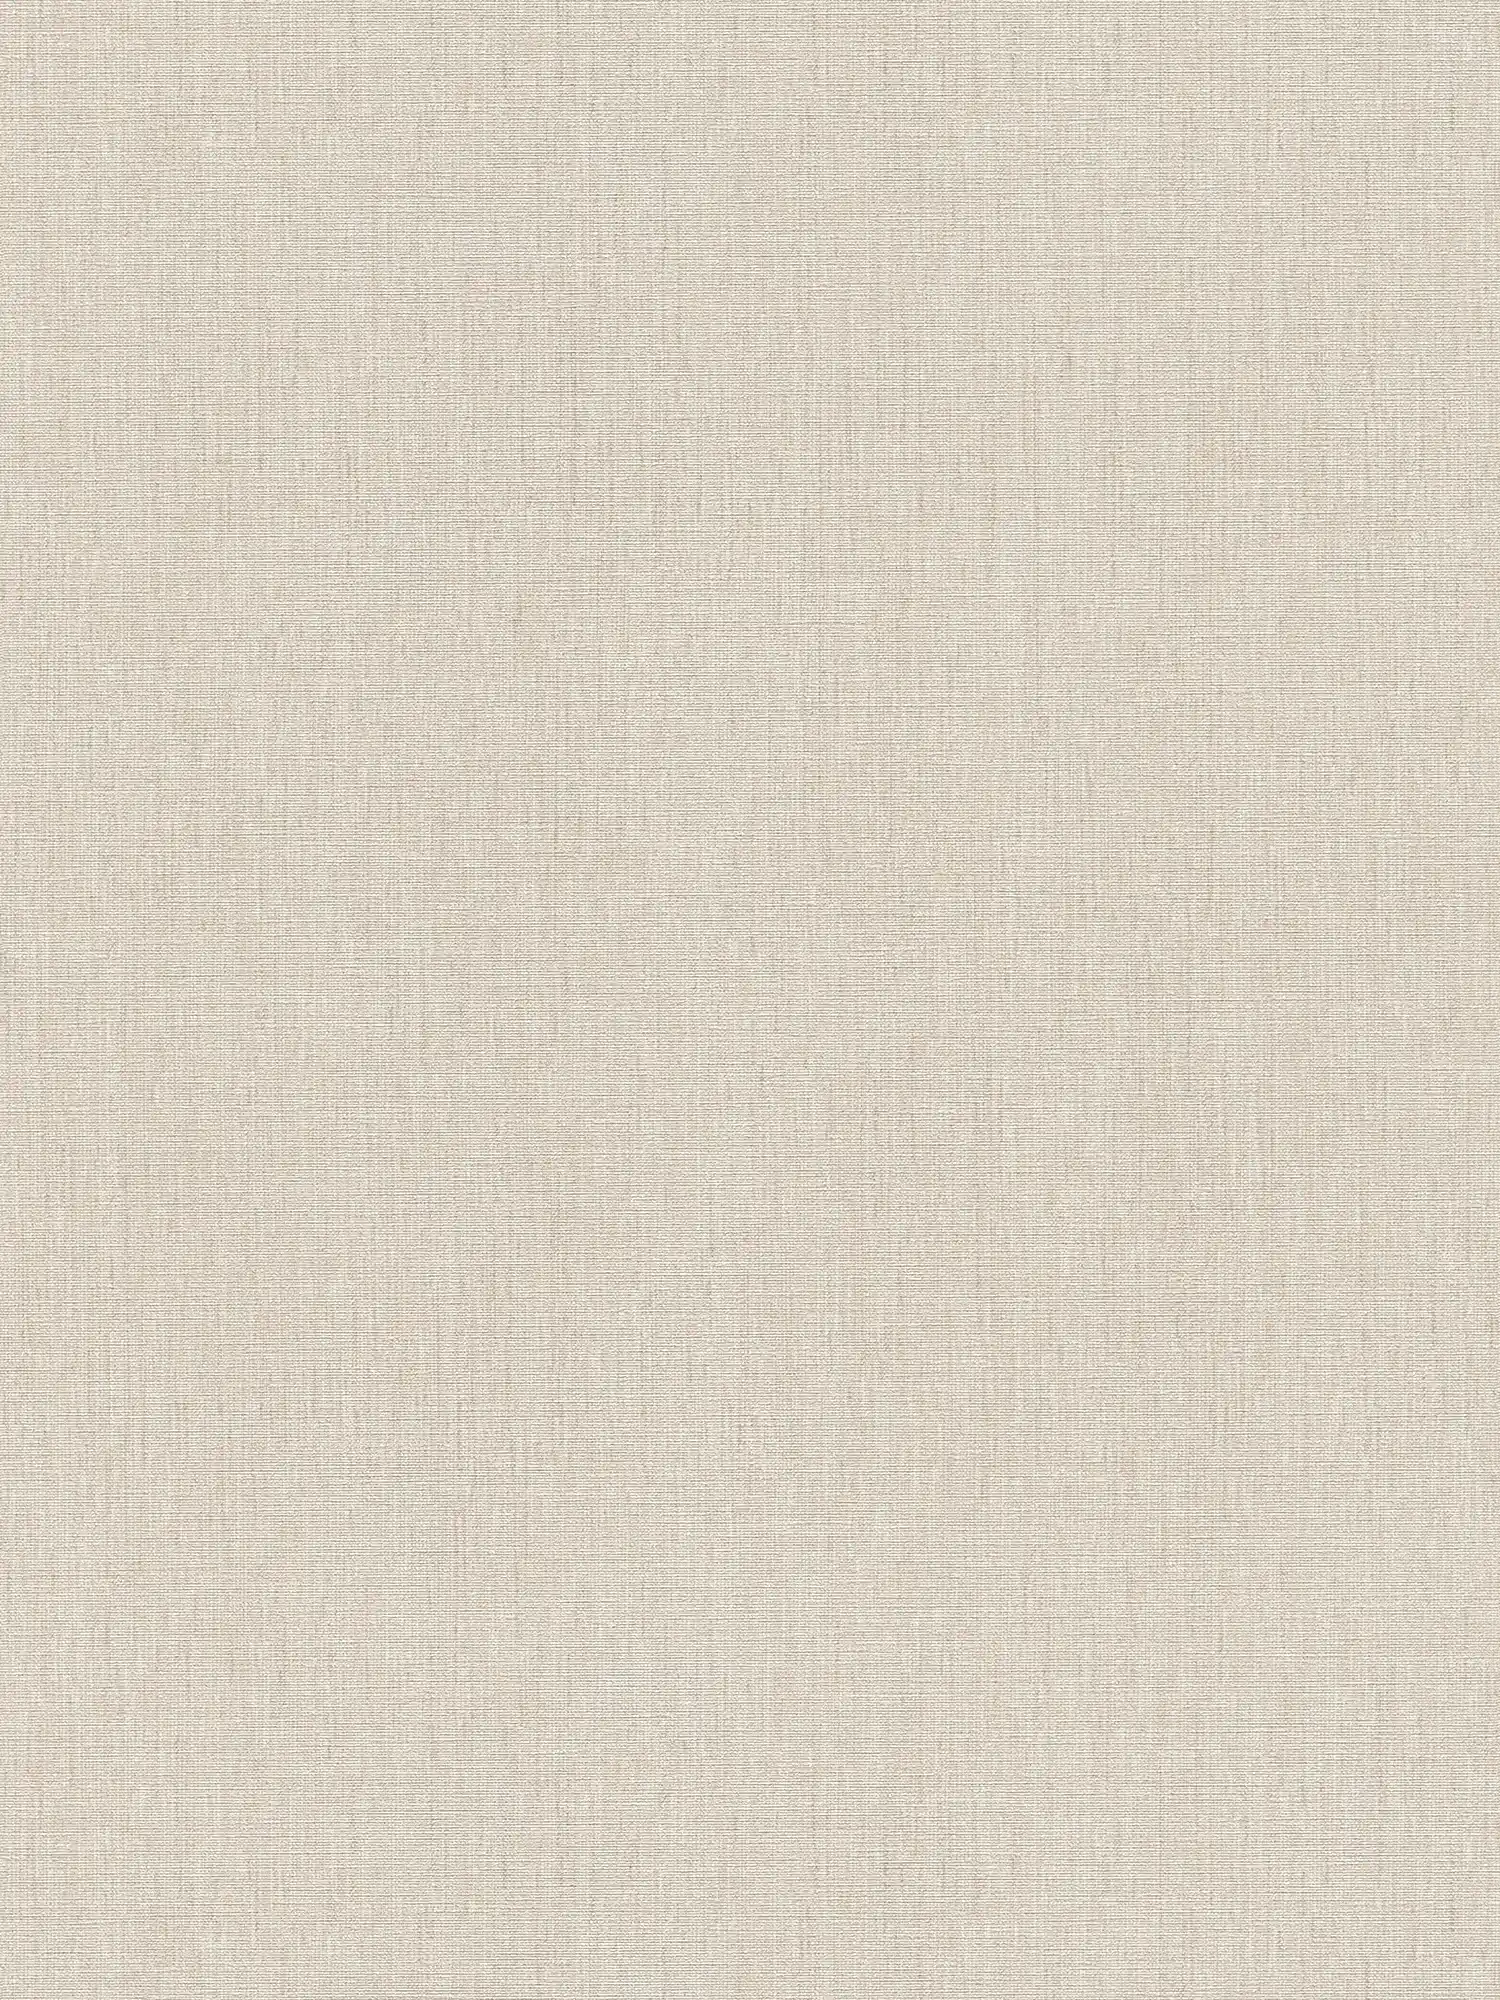 Plain wallpaper in textile look lightly textured - Beige
